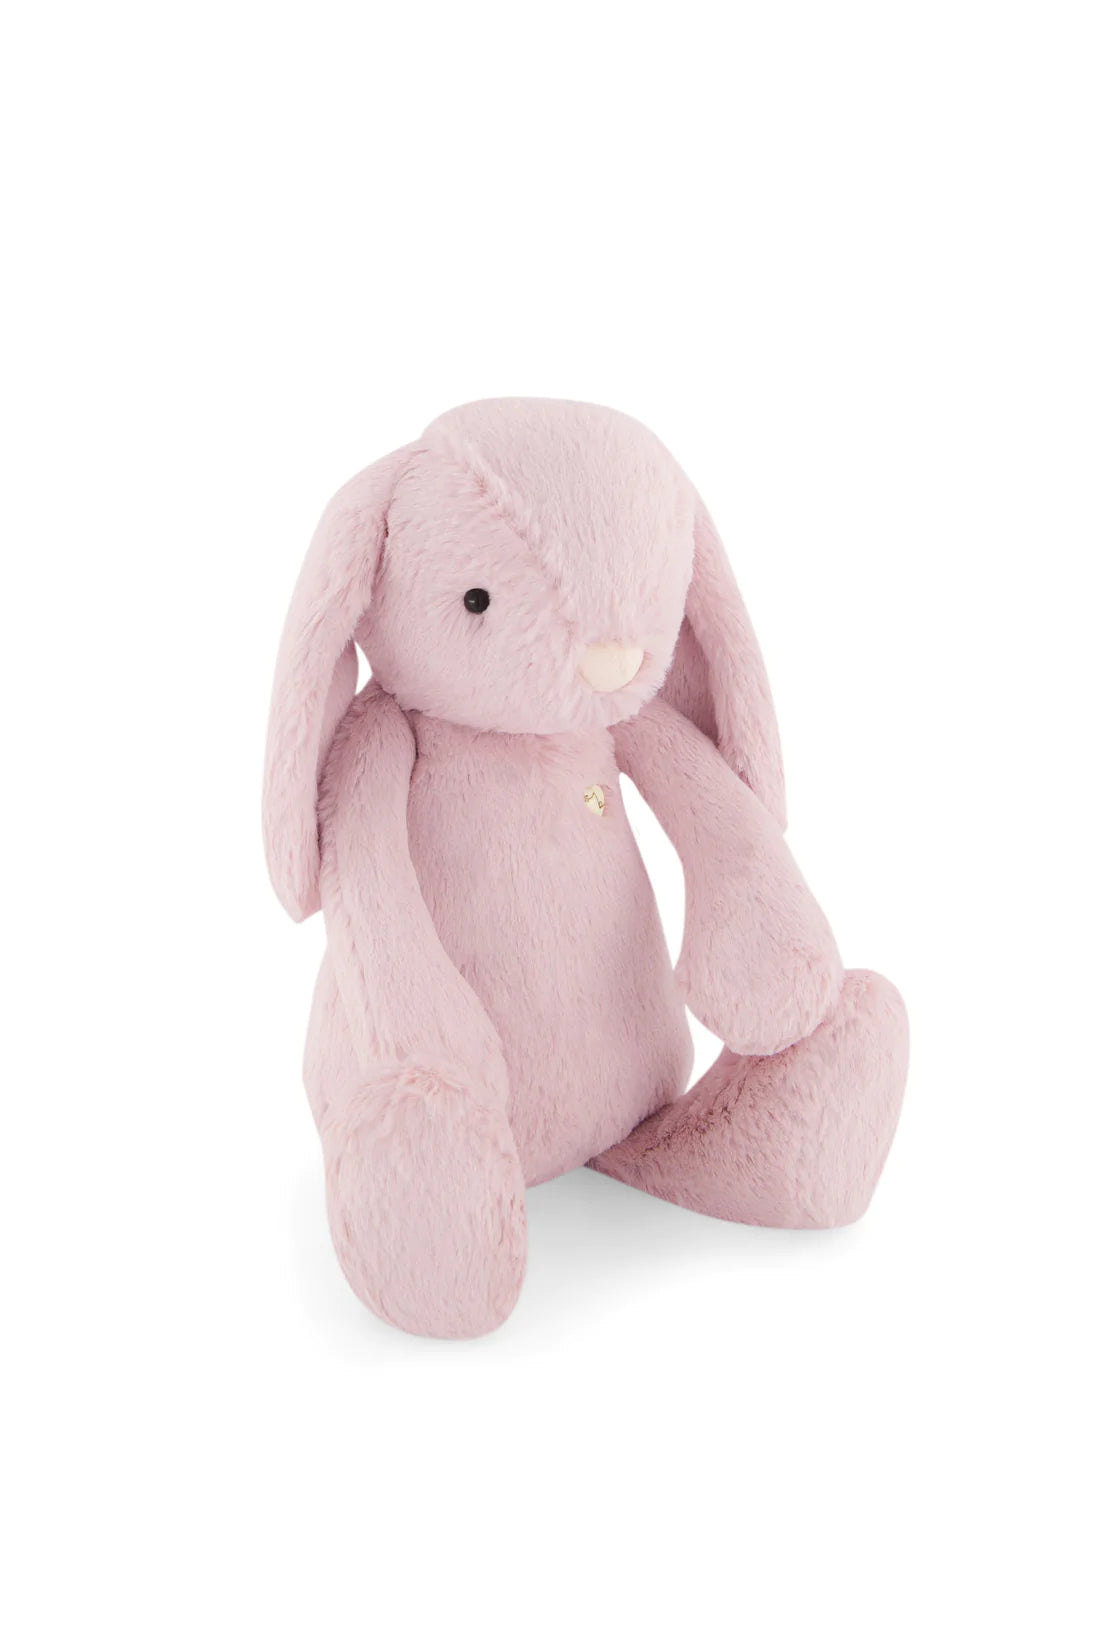 Snuggle Bunnies - Penelope the Bunny - Powder Pink | Jamie Kay